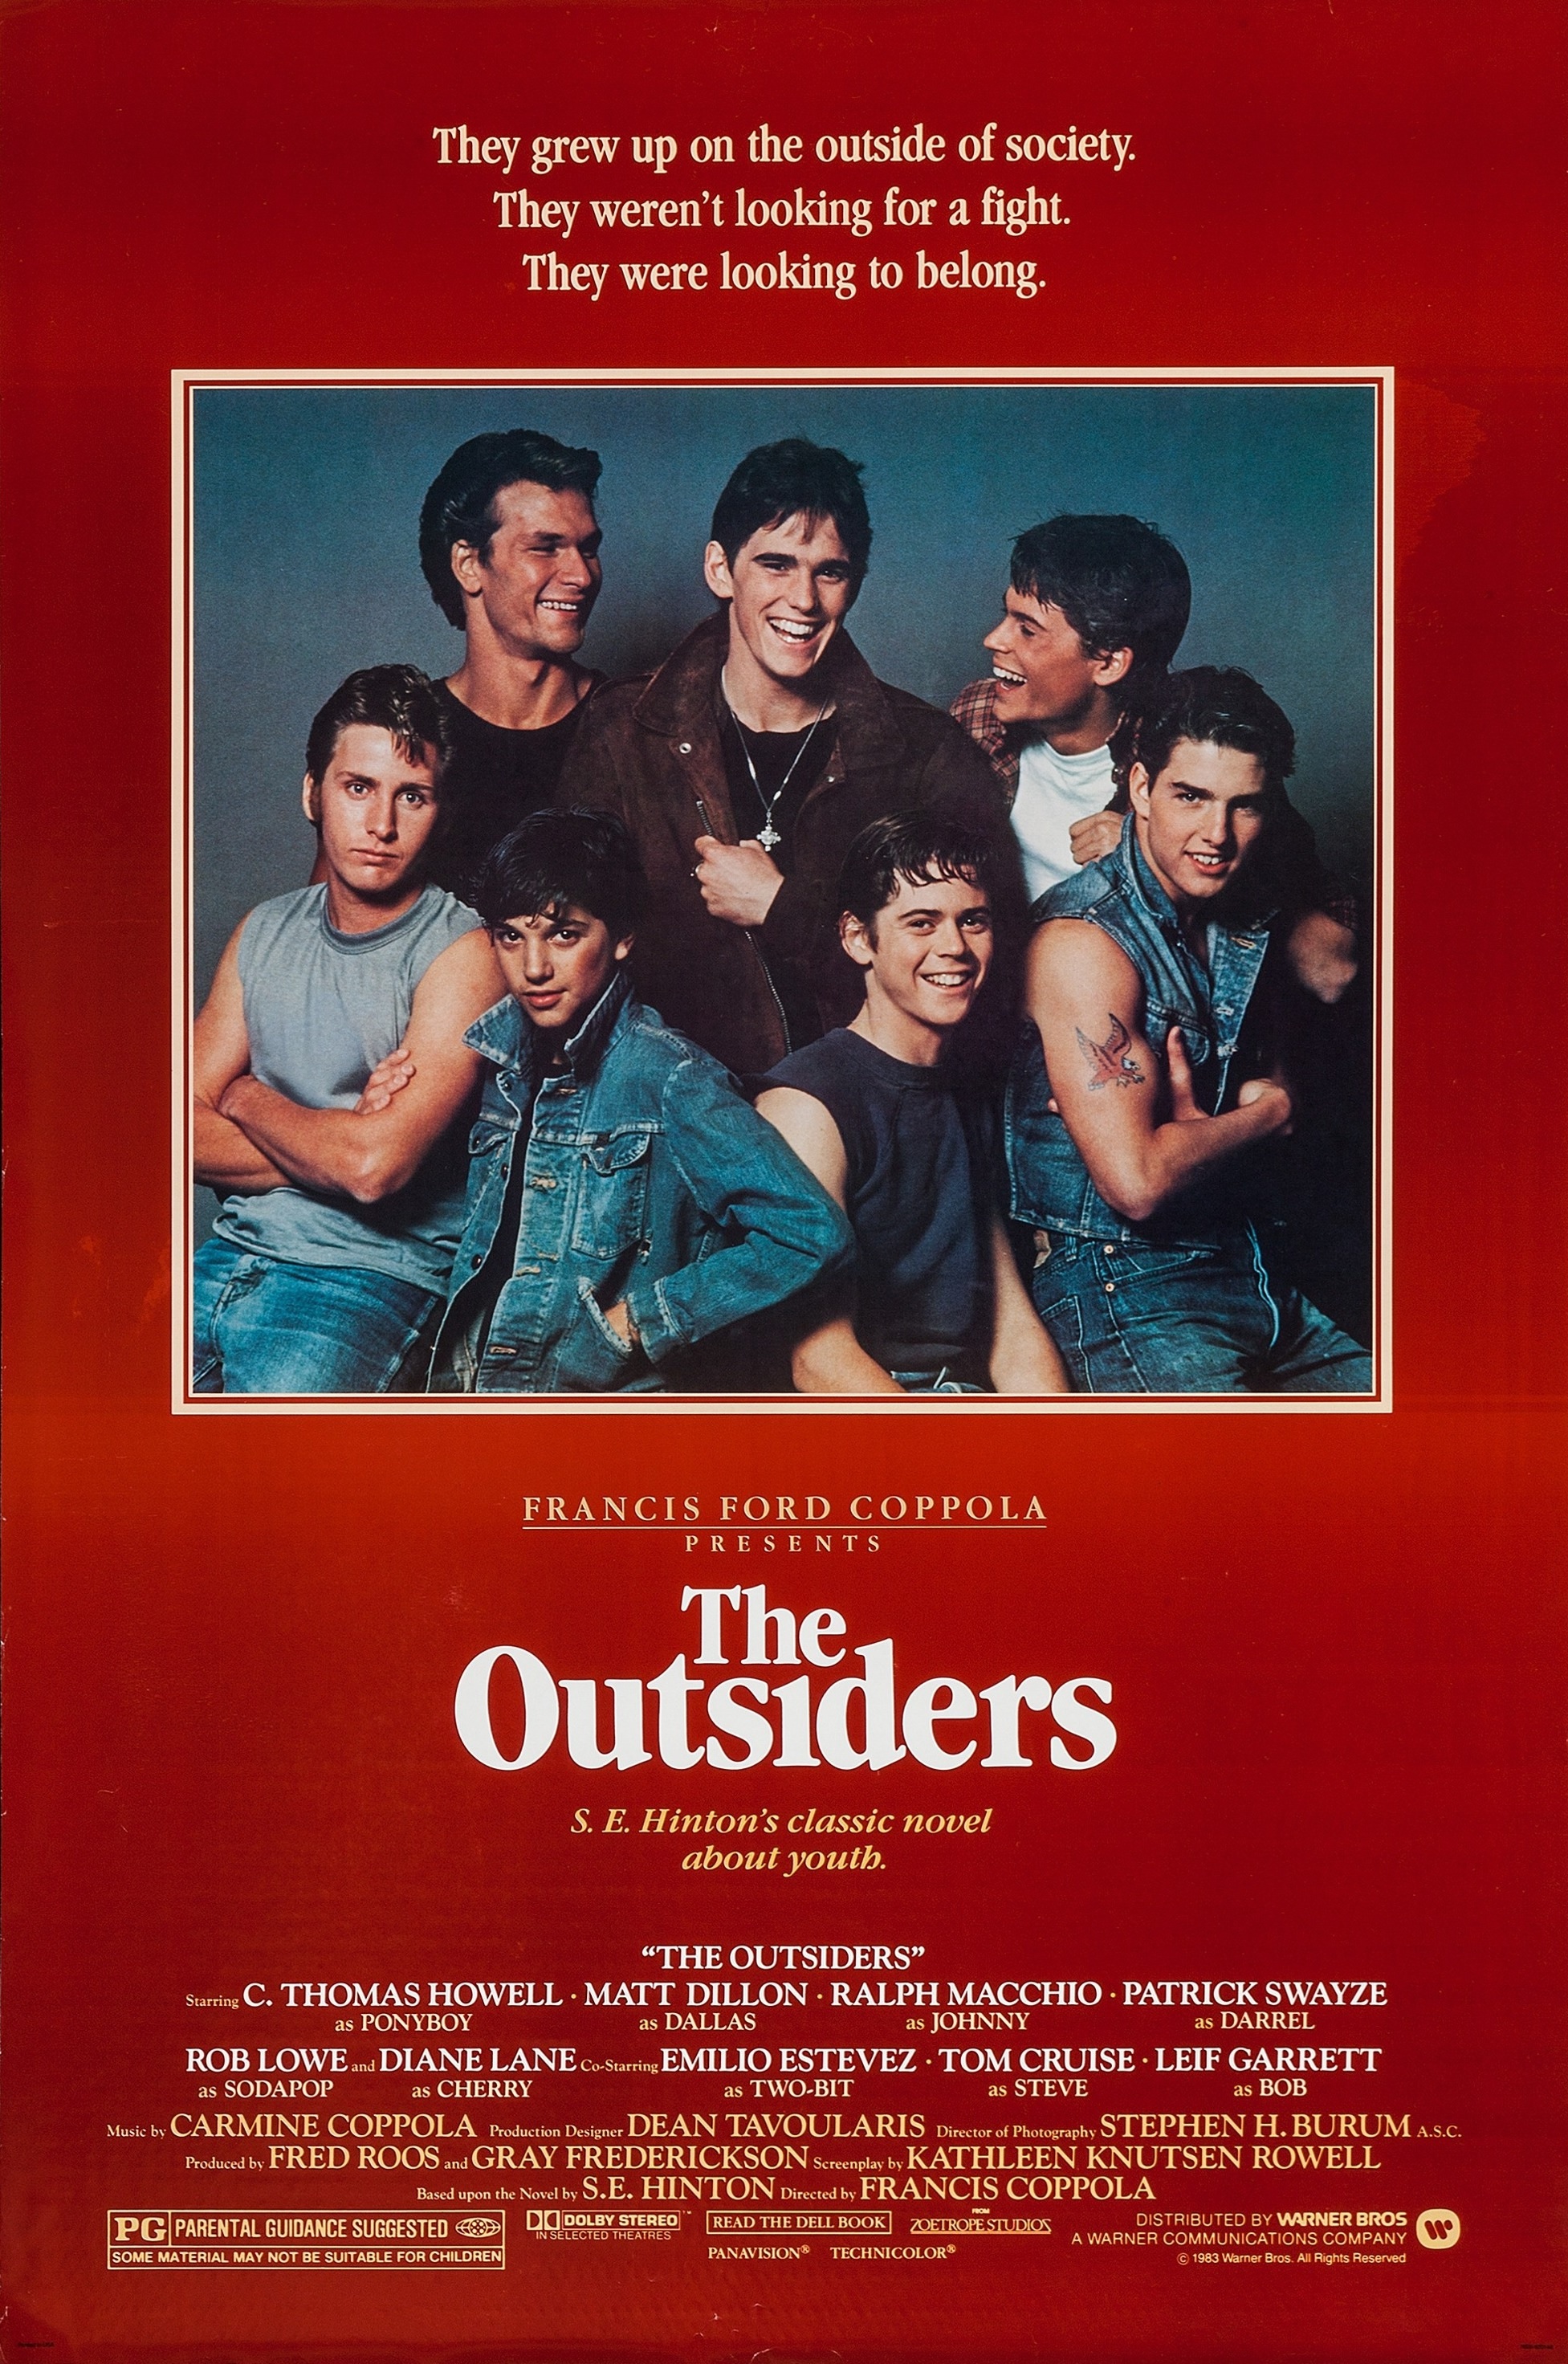 The Outsiders (film) | Warner Bros. Entertainment Wiki | Fandom